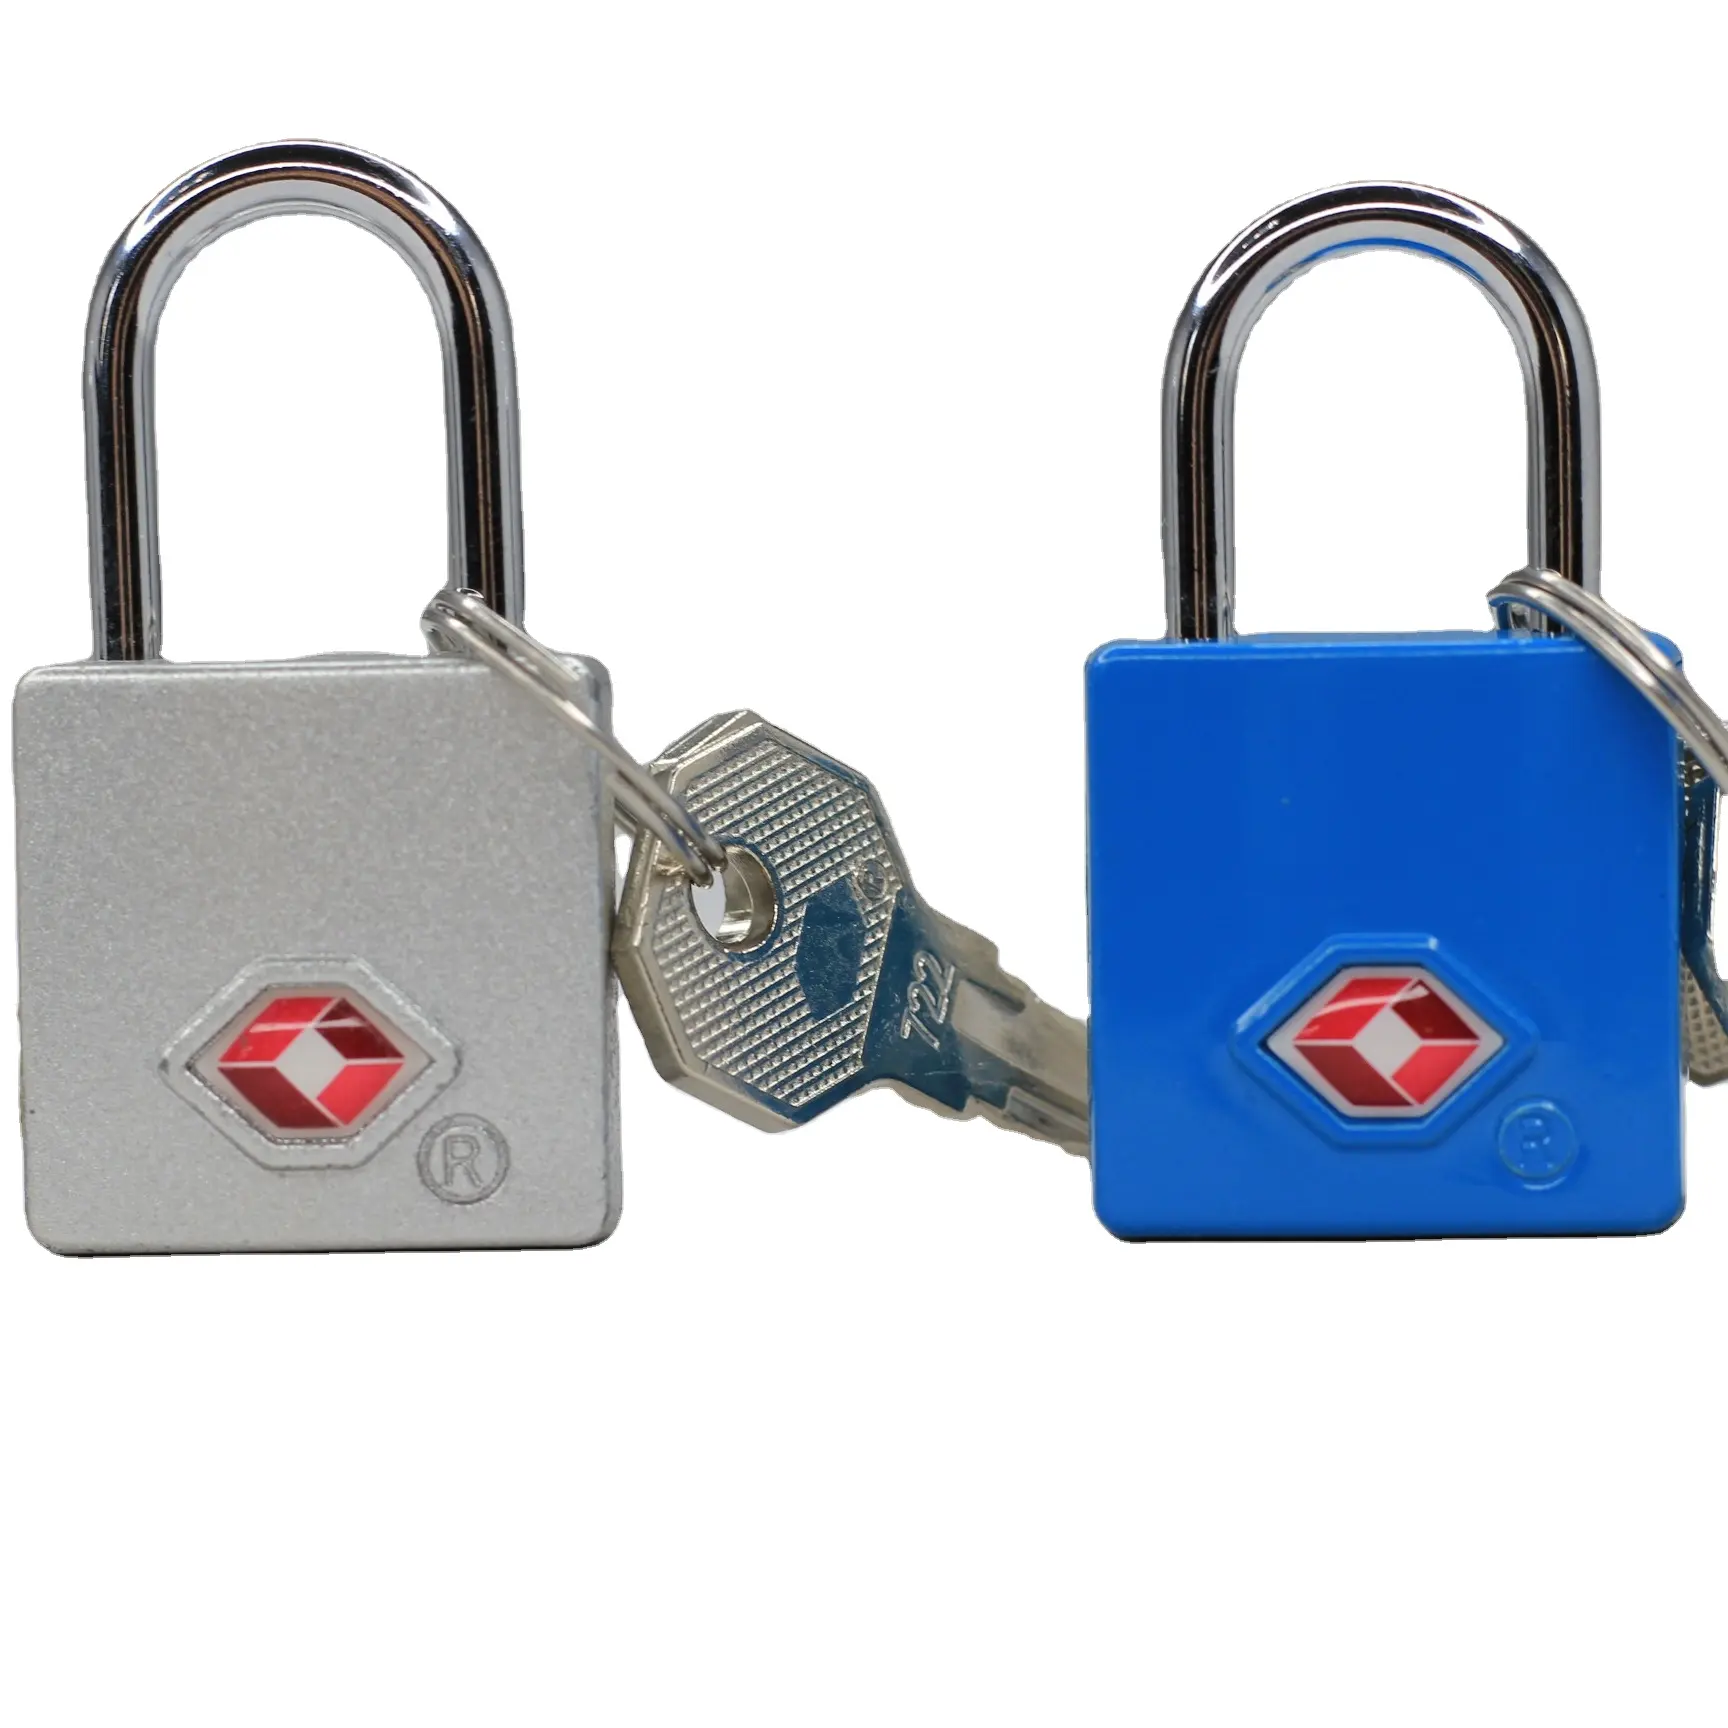 Travelsky Best Selling TSA Security Small Lock Zinc Alloy Travel Luggage Key Lock